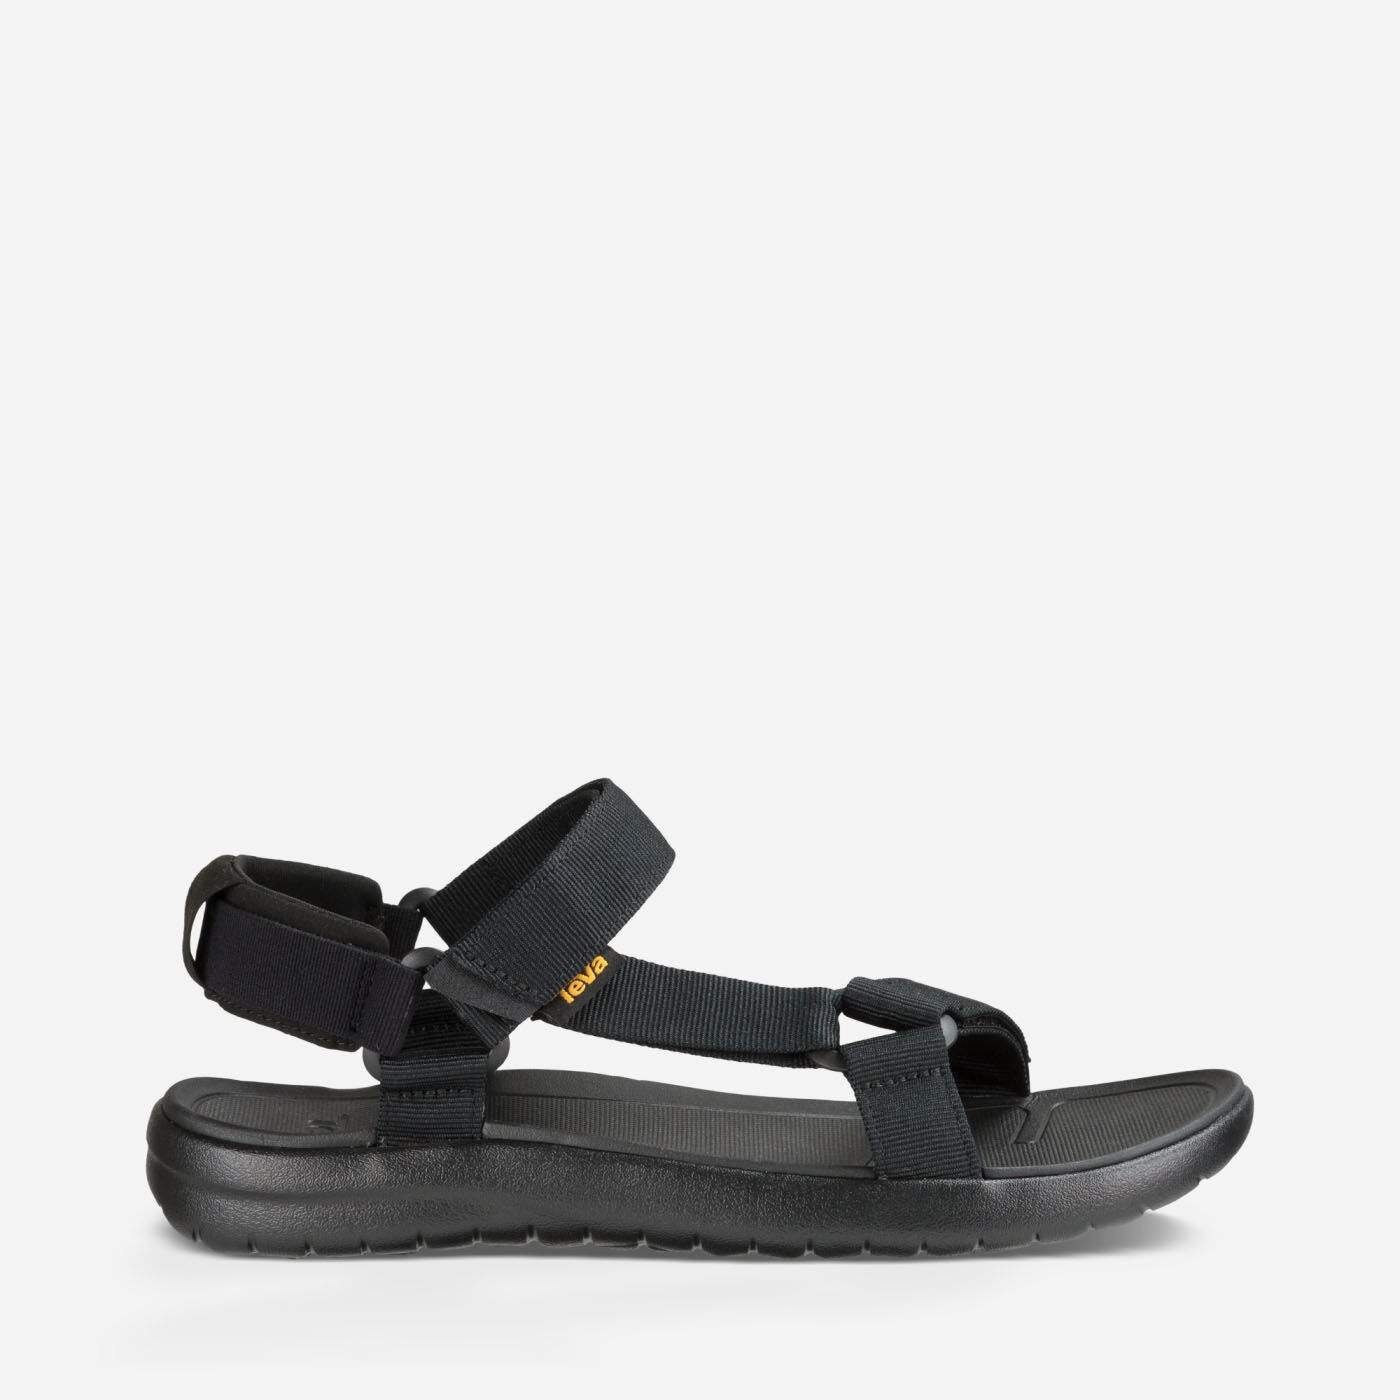 Teva Sanborn Universal sandal herre Black (1015156) 43 2018